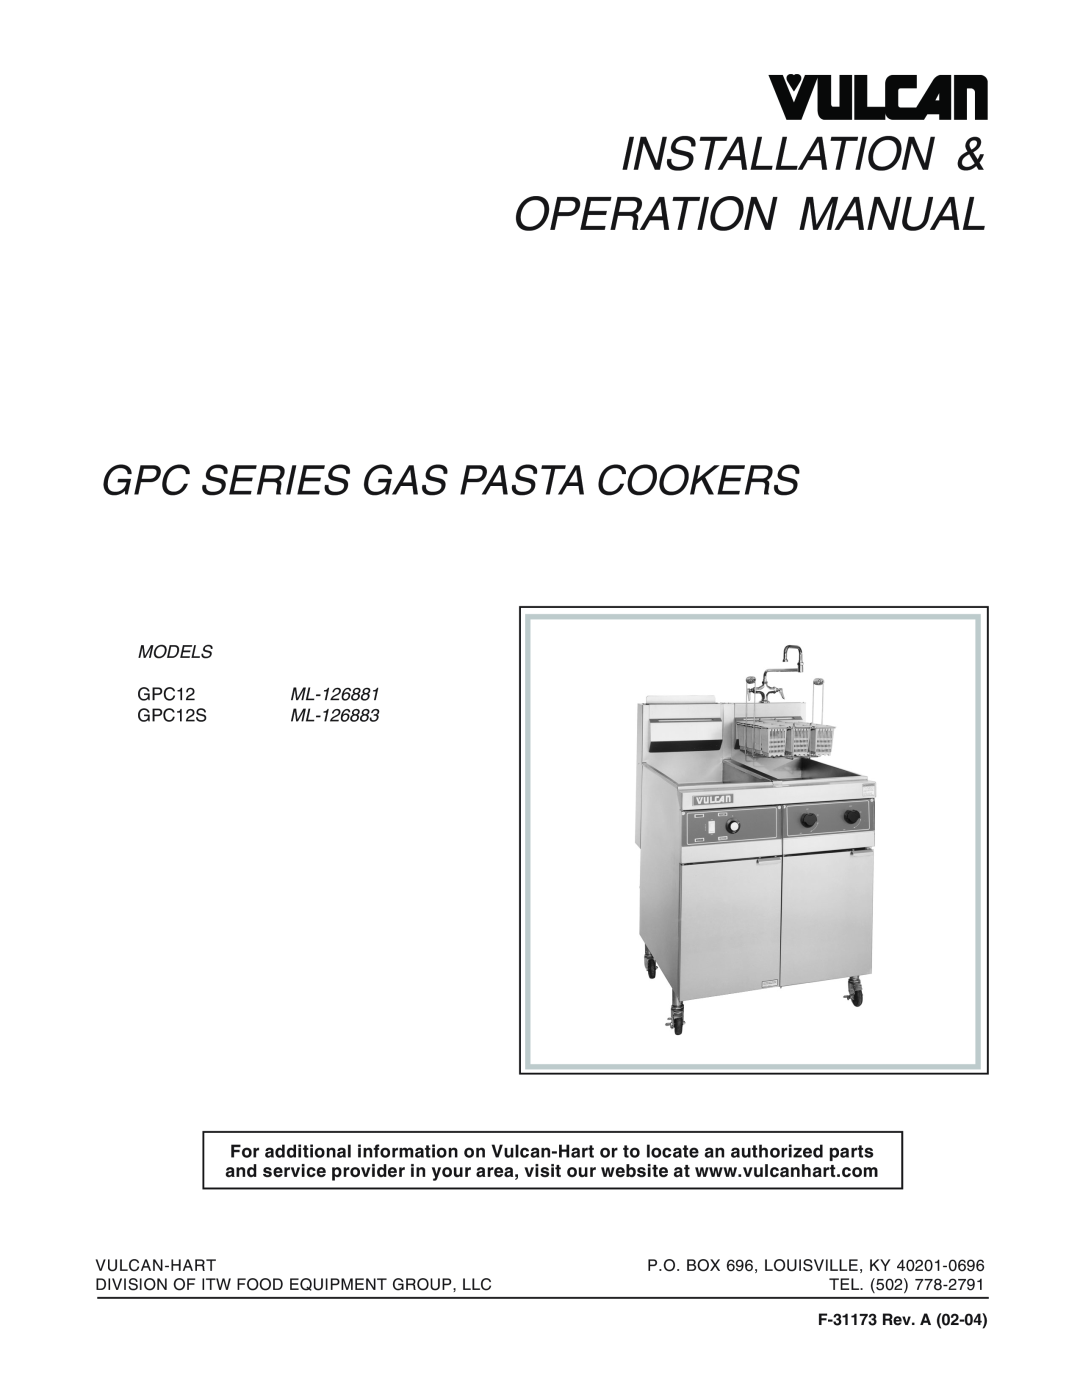 Vulcan-Hart manual Gpc Series Gas Pasta Cookers, MODELS GPC12ML-126881 GPC12SML-126883, Vulcan-Hart, Tel, F-31173Rev. A 